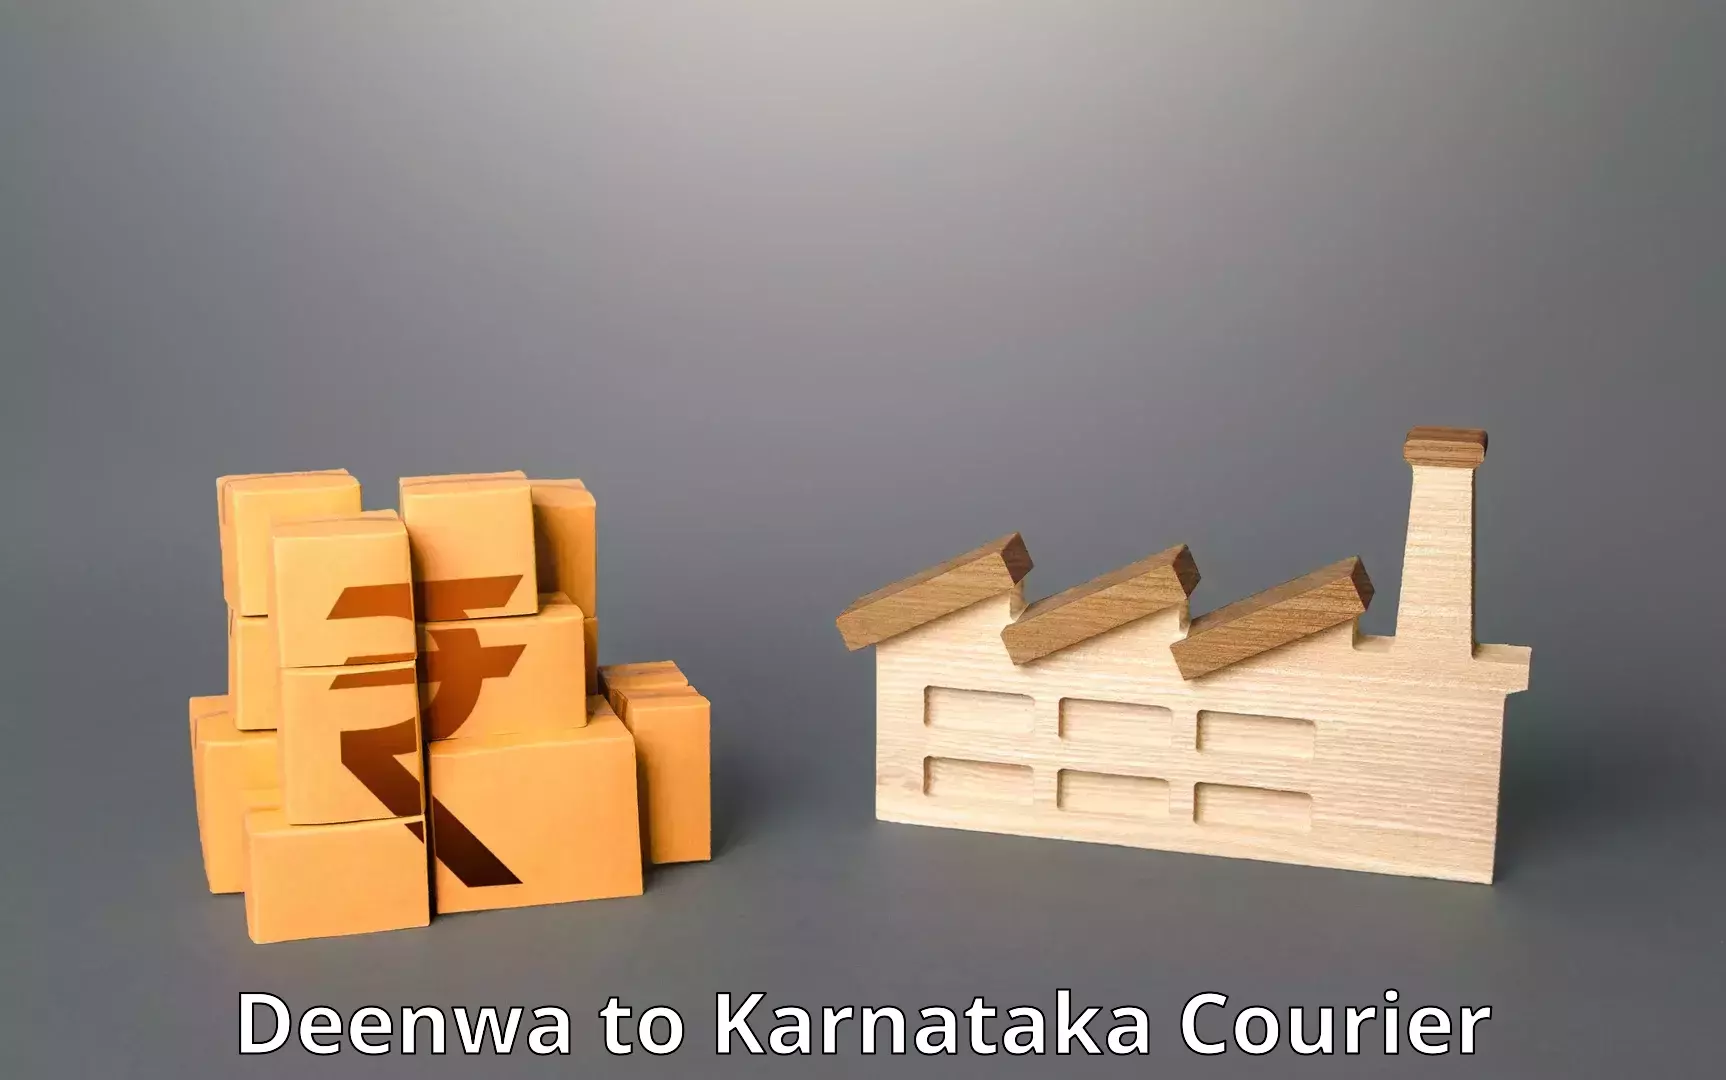 24-hour courier service Deenwa to Karnataka